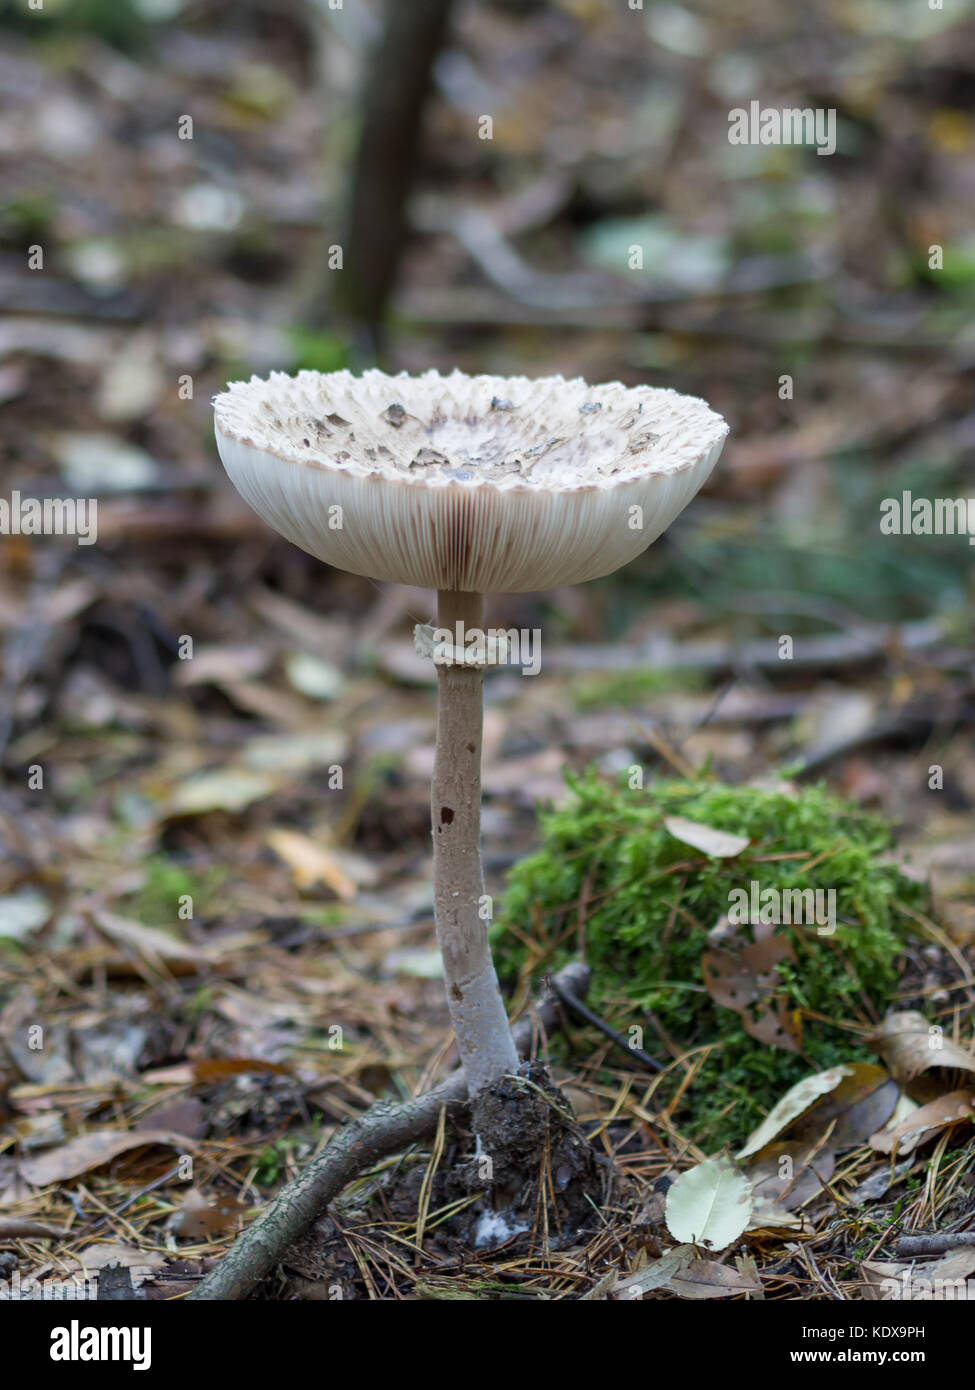 Closeup of single edible parasol mushroom or macrolepiota procera growing on forest ground, Berlin, Germany Stock Photo